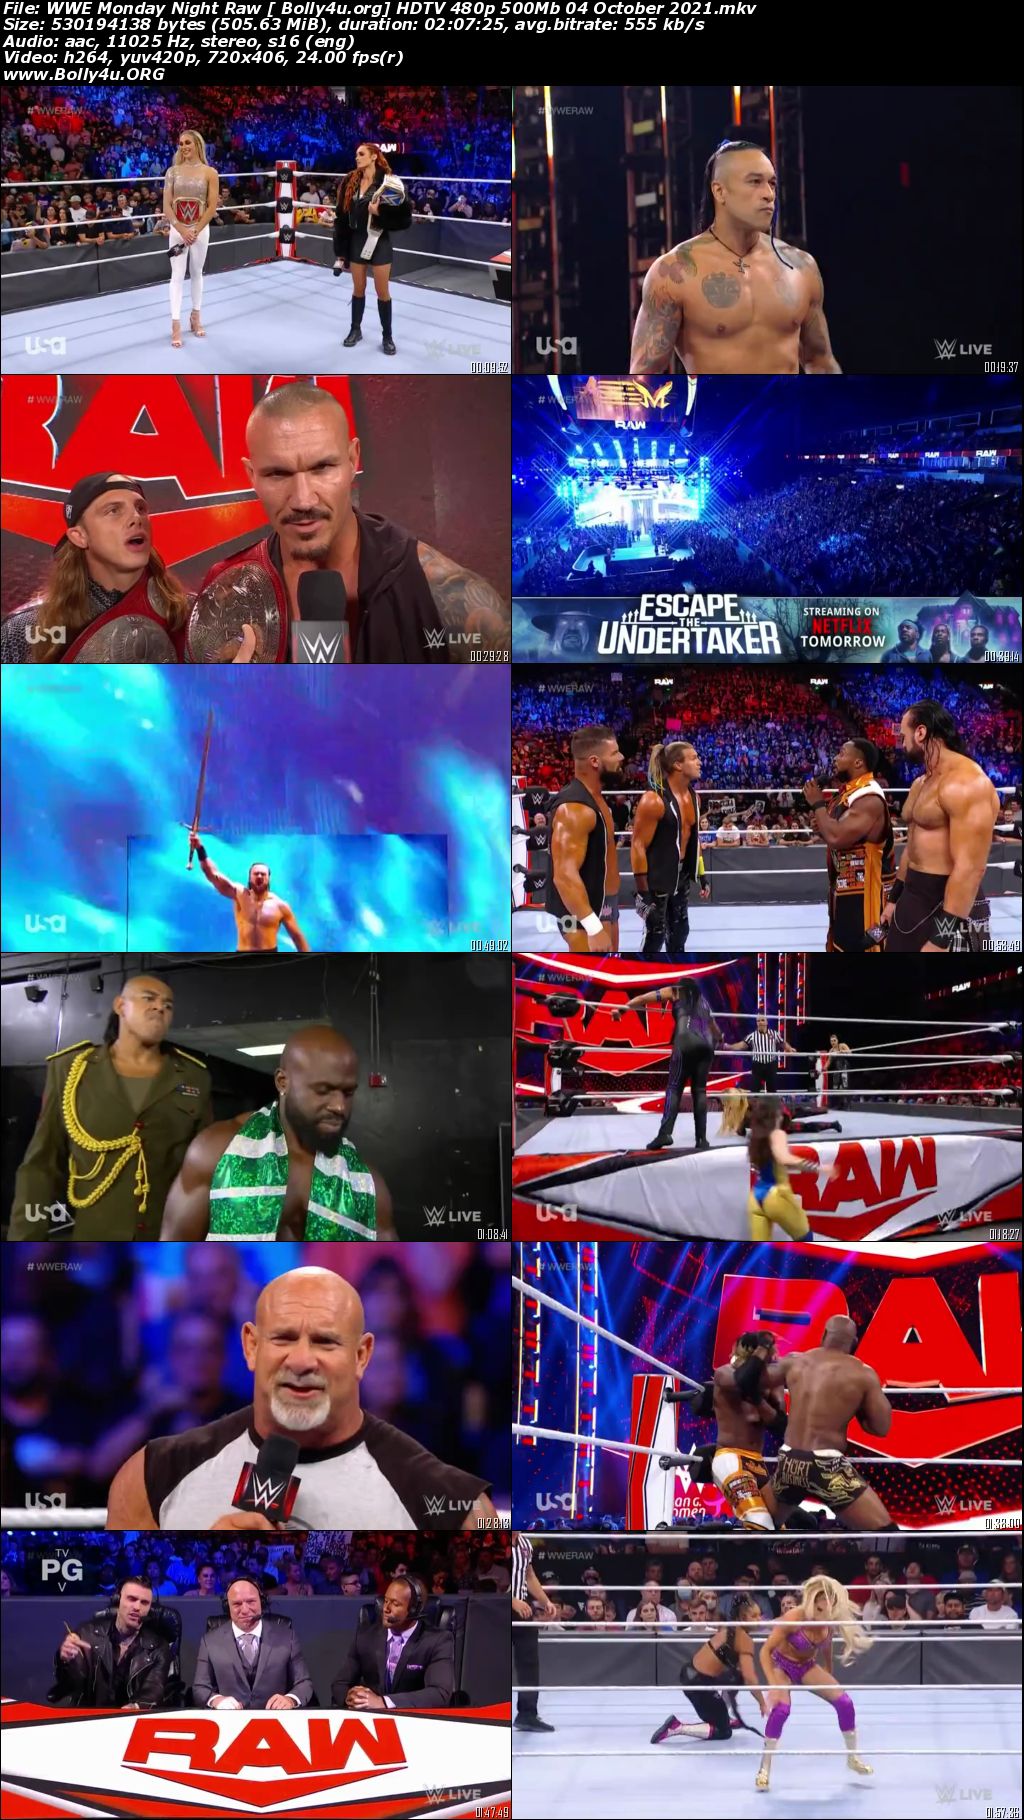 WWE Monday Night Raw HDTV 480p 500Mb 04 October 2021 Download